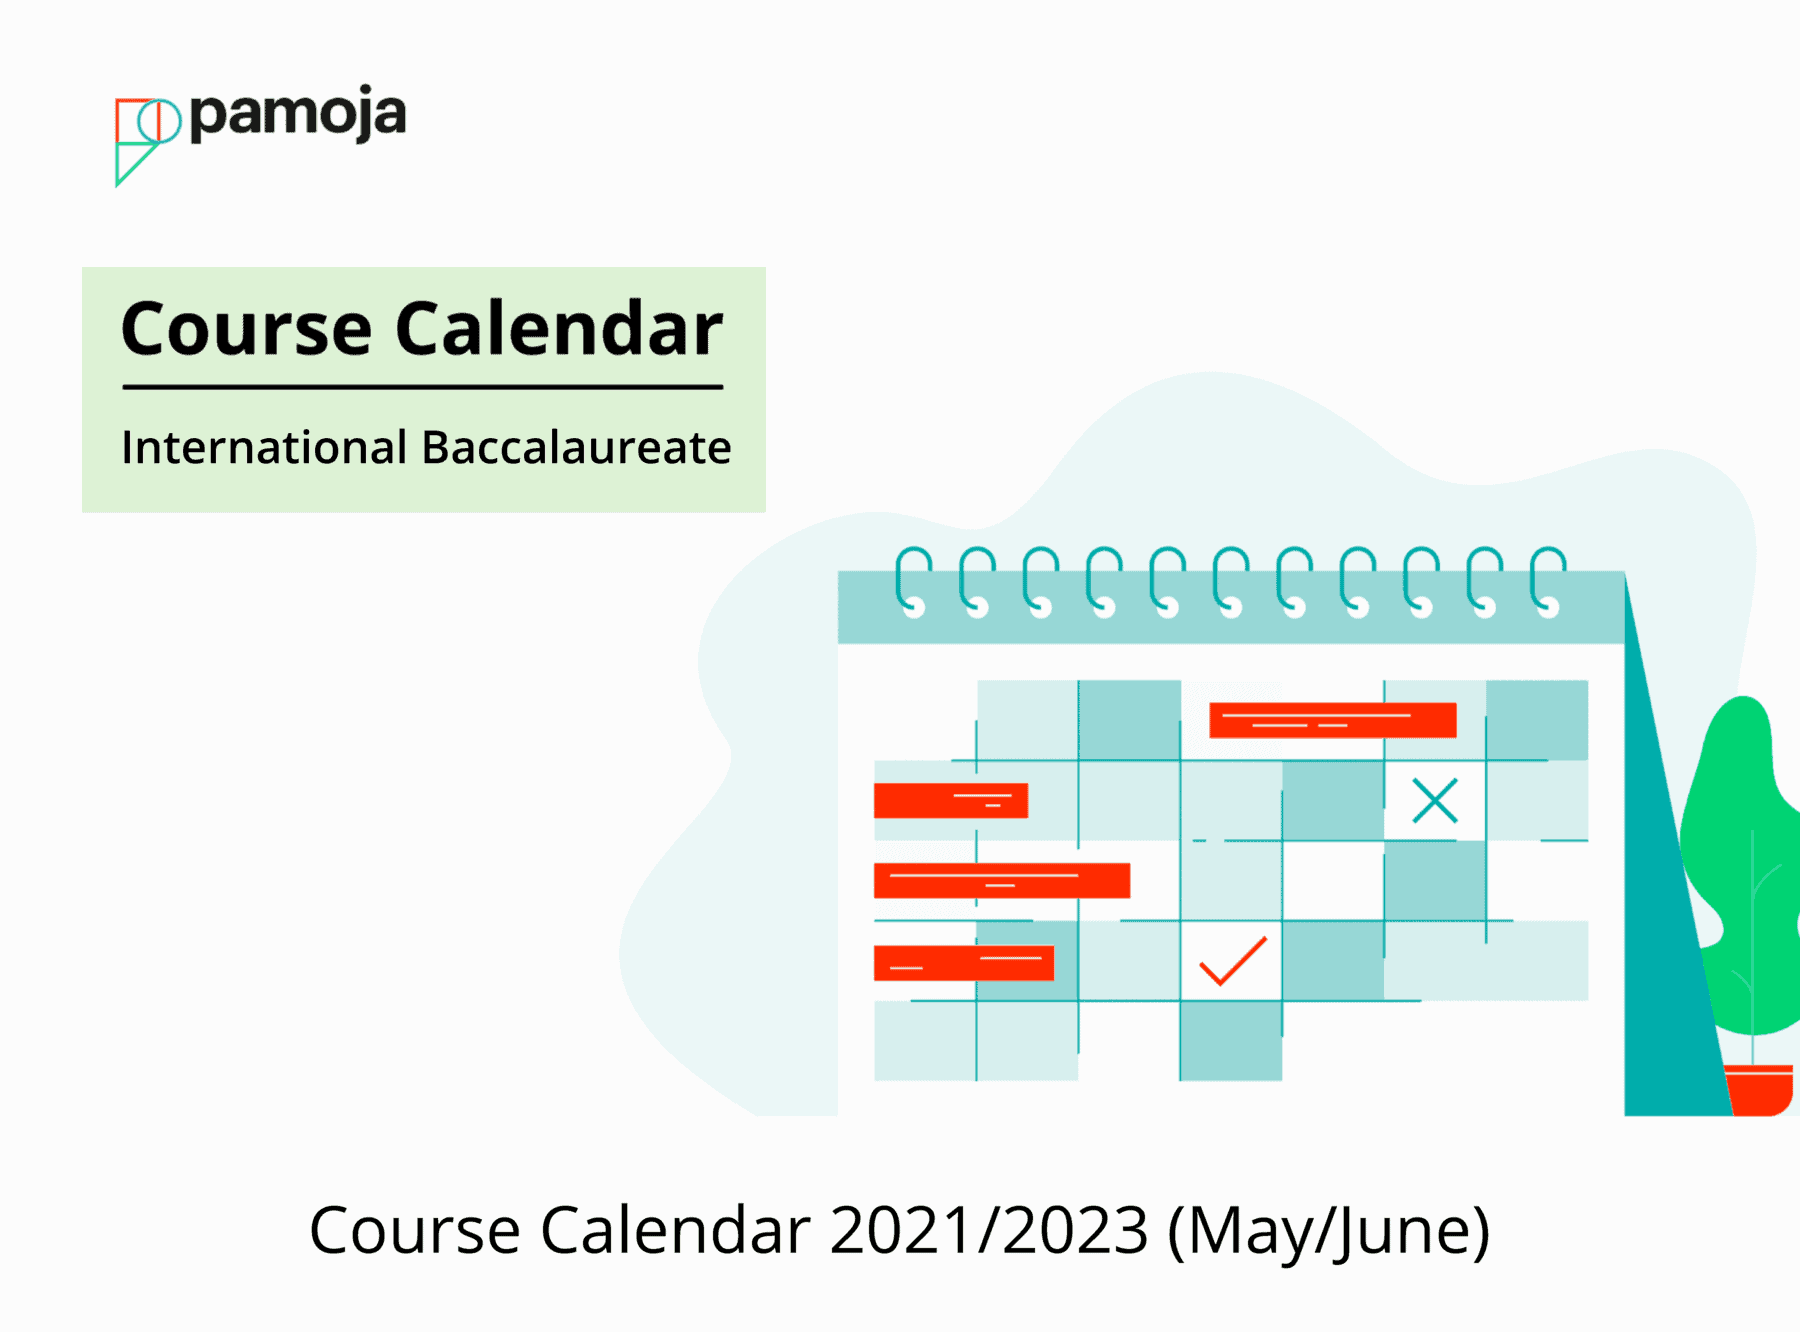 Course Calendar 2021/2023 (May/June)